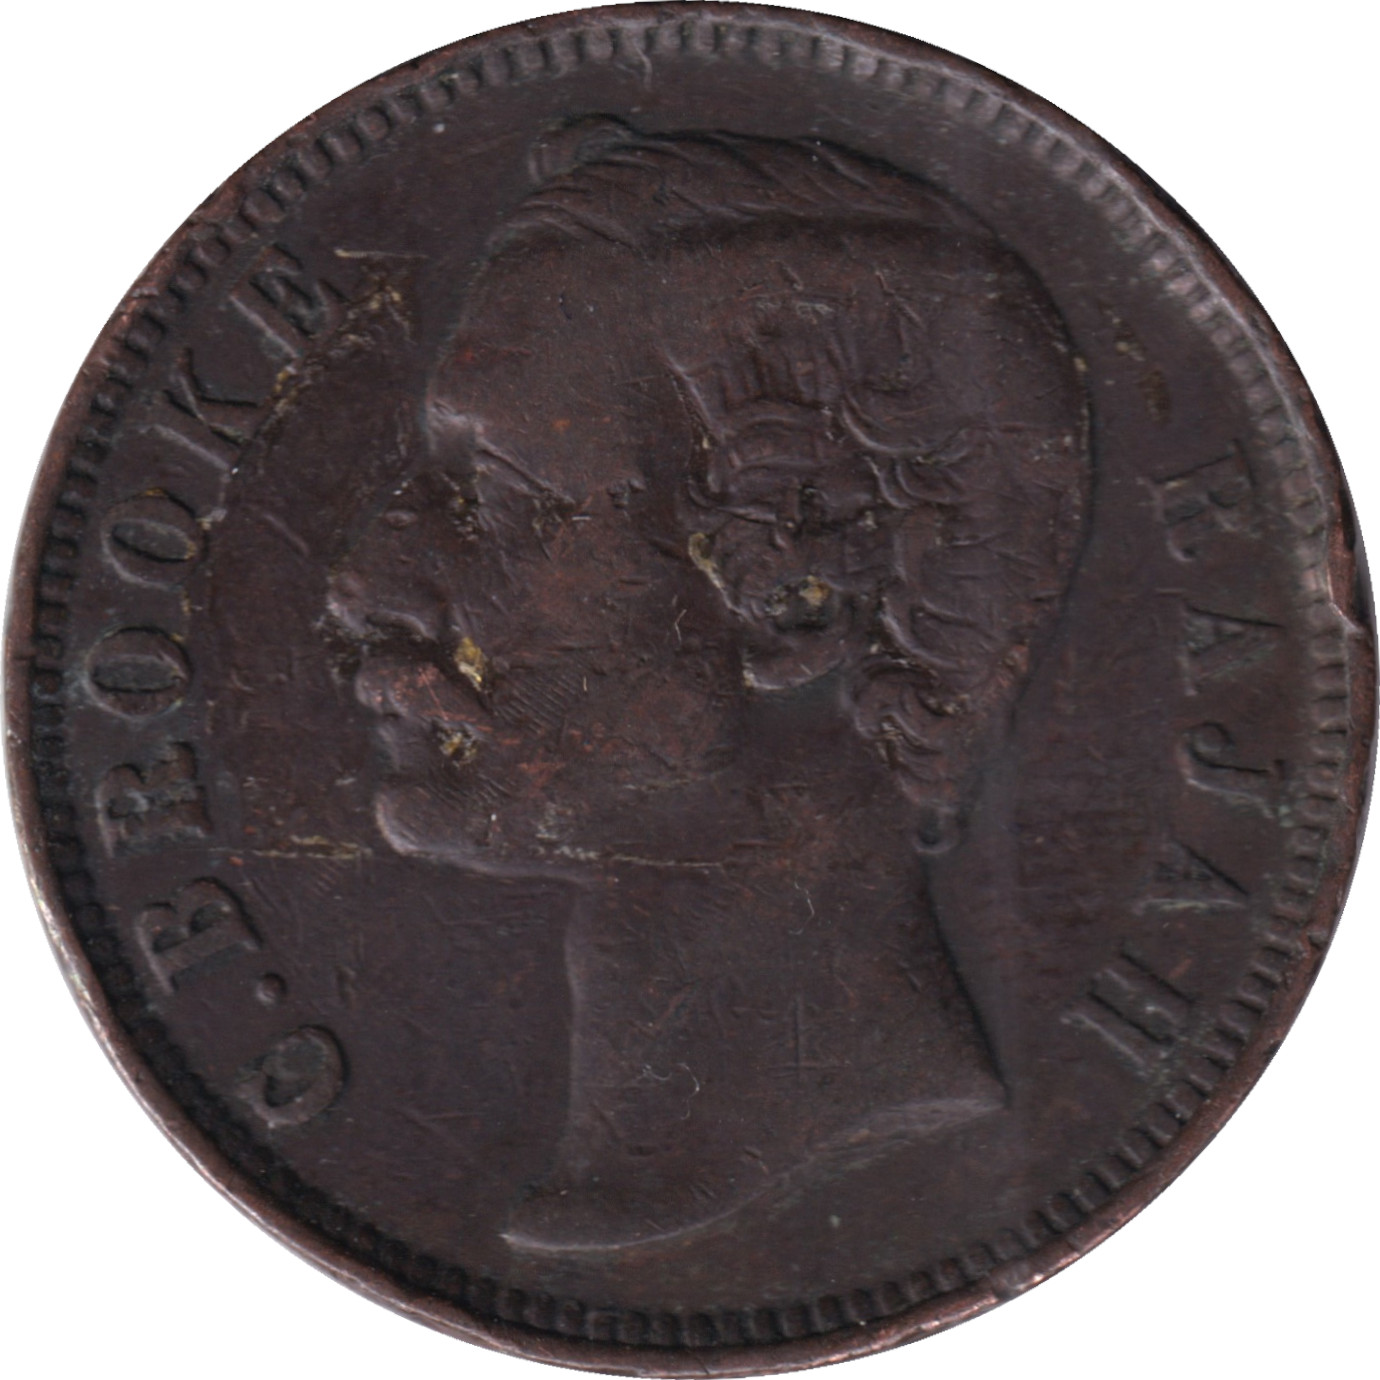 1 cent - Charles J. Brooke • Type 1